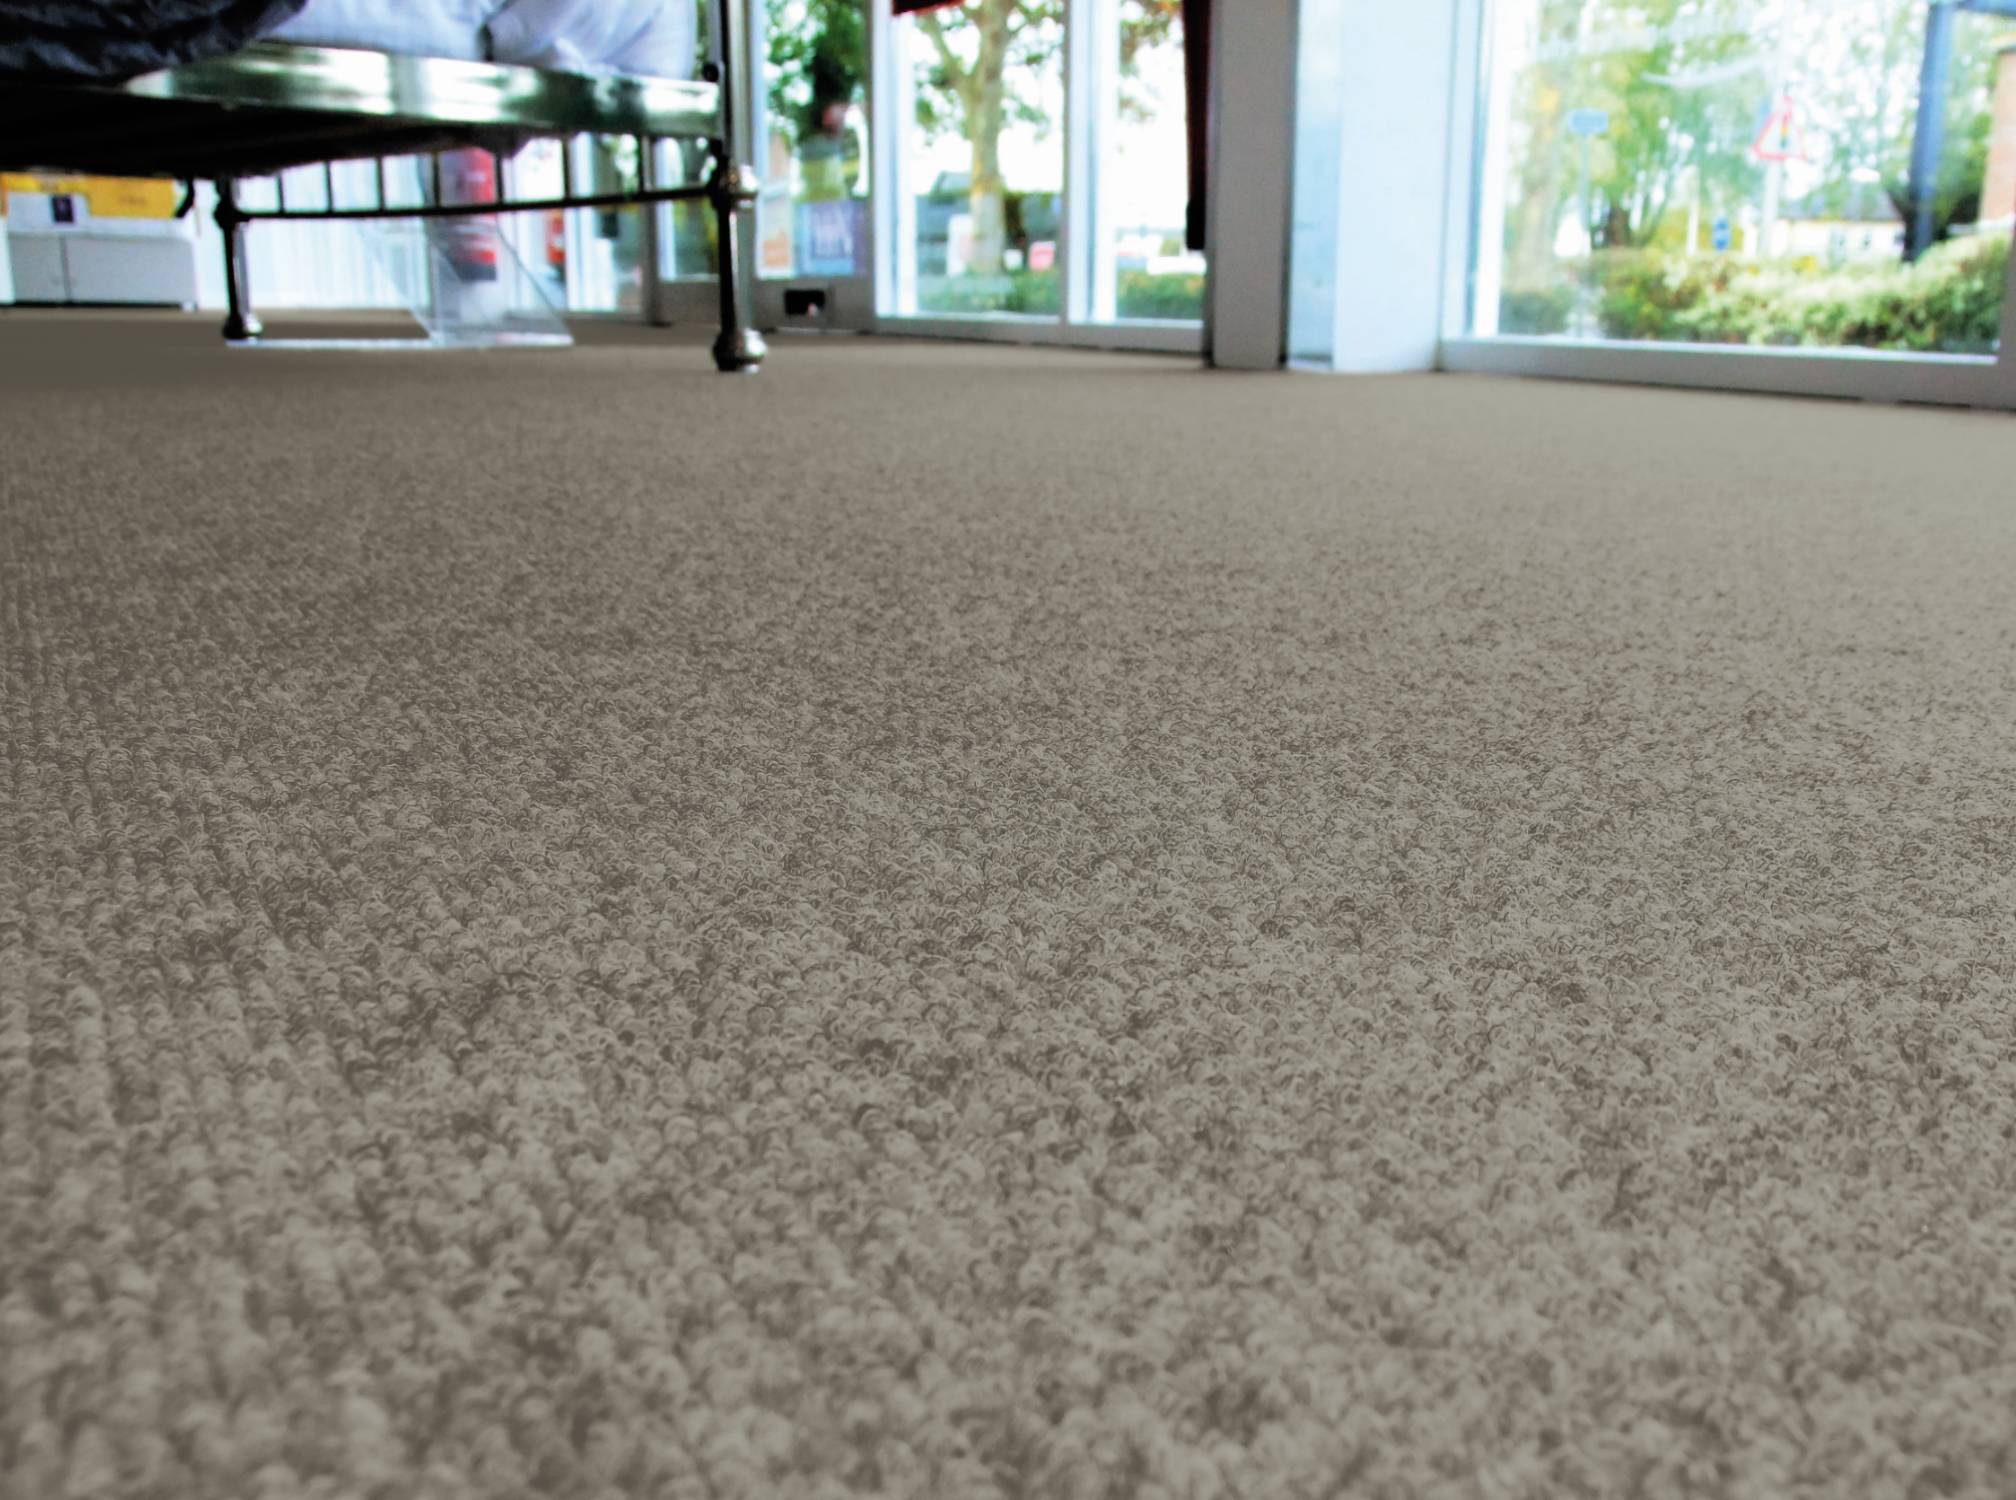 Eurocord Carpet Sheet - Needled pile carpets